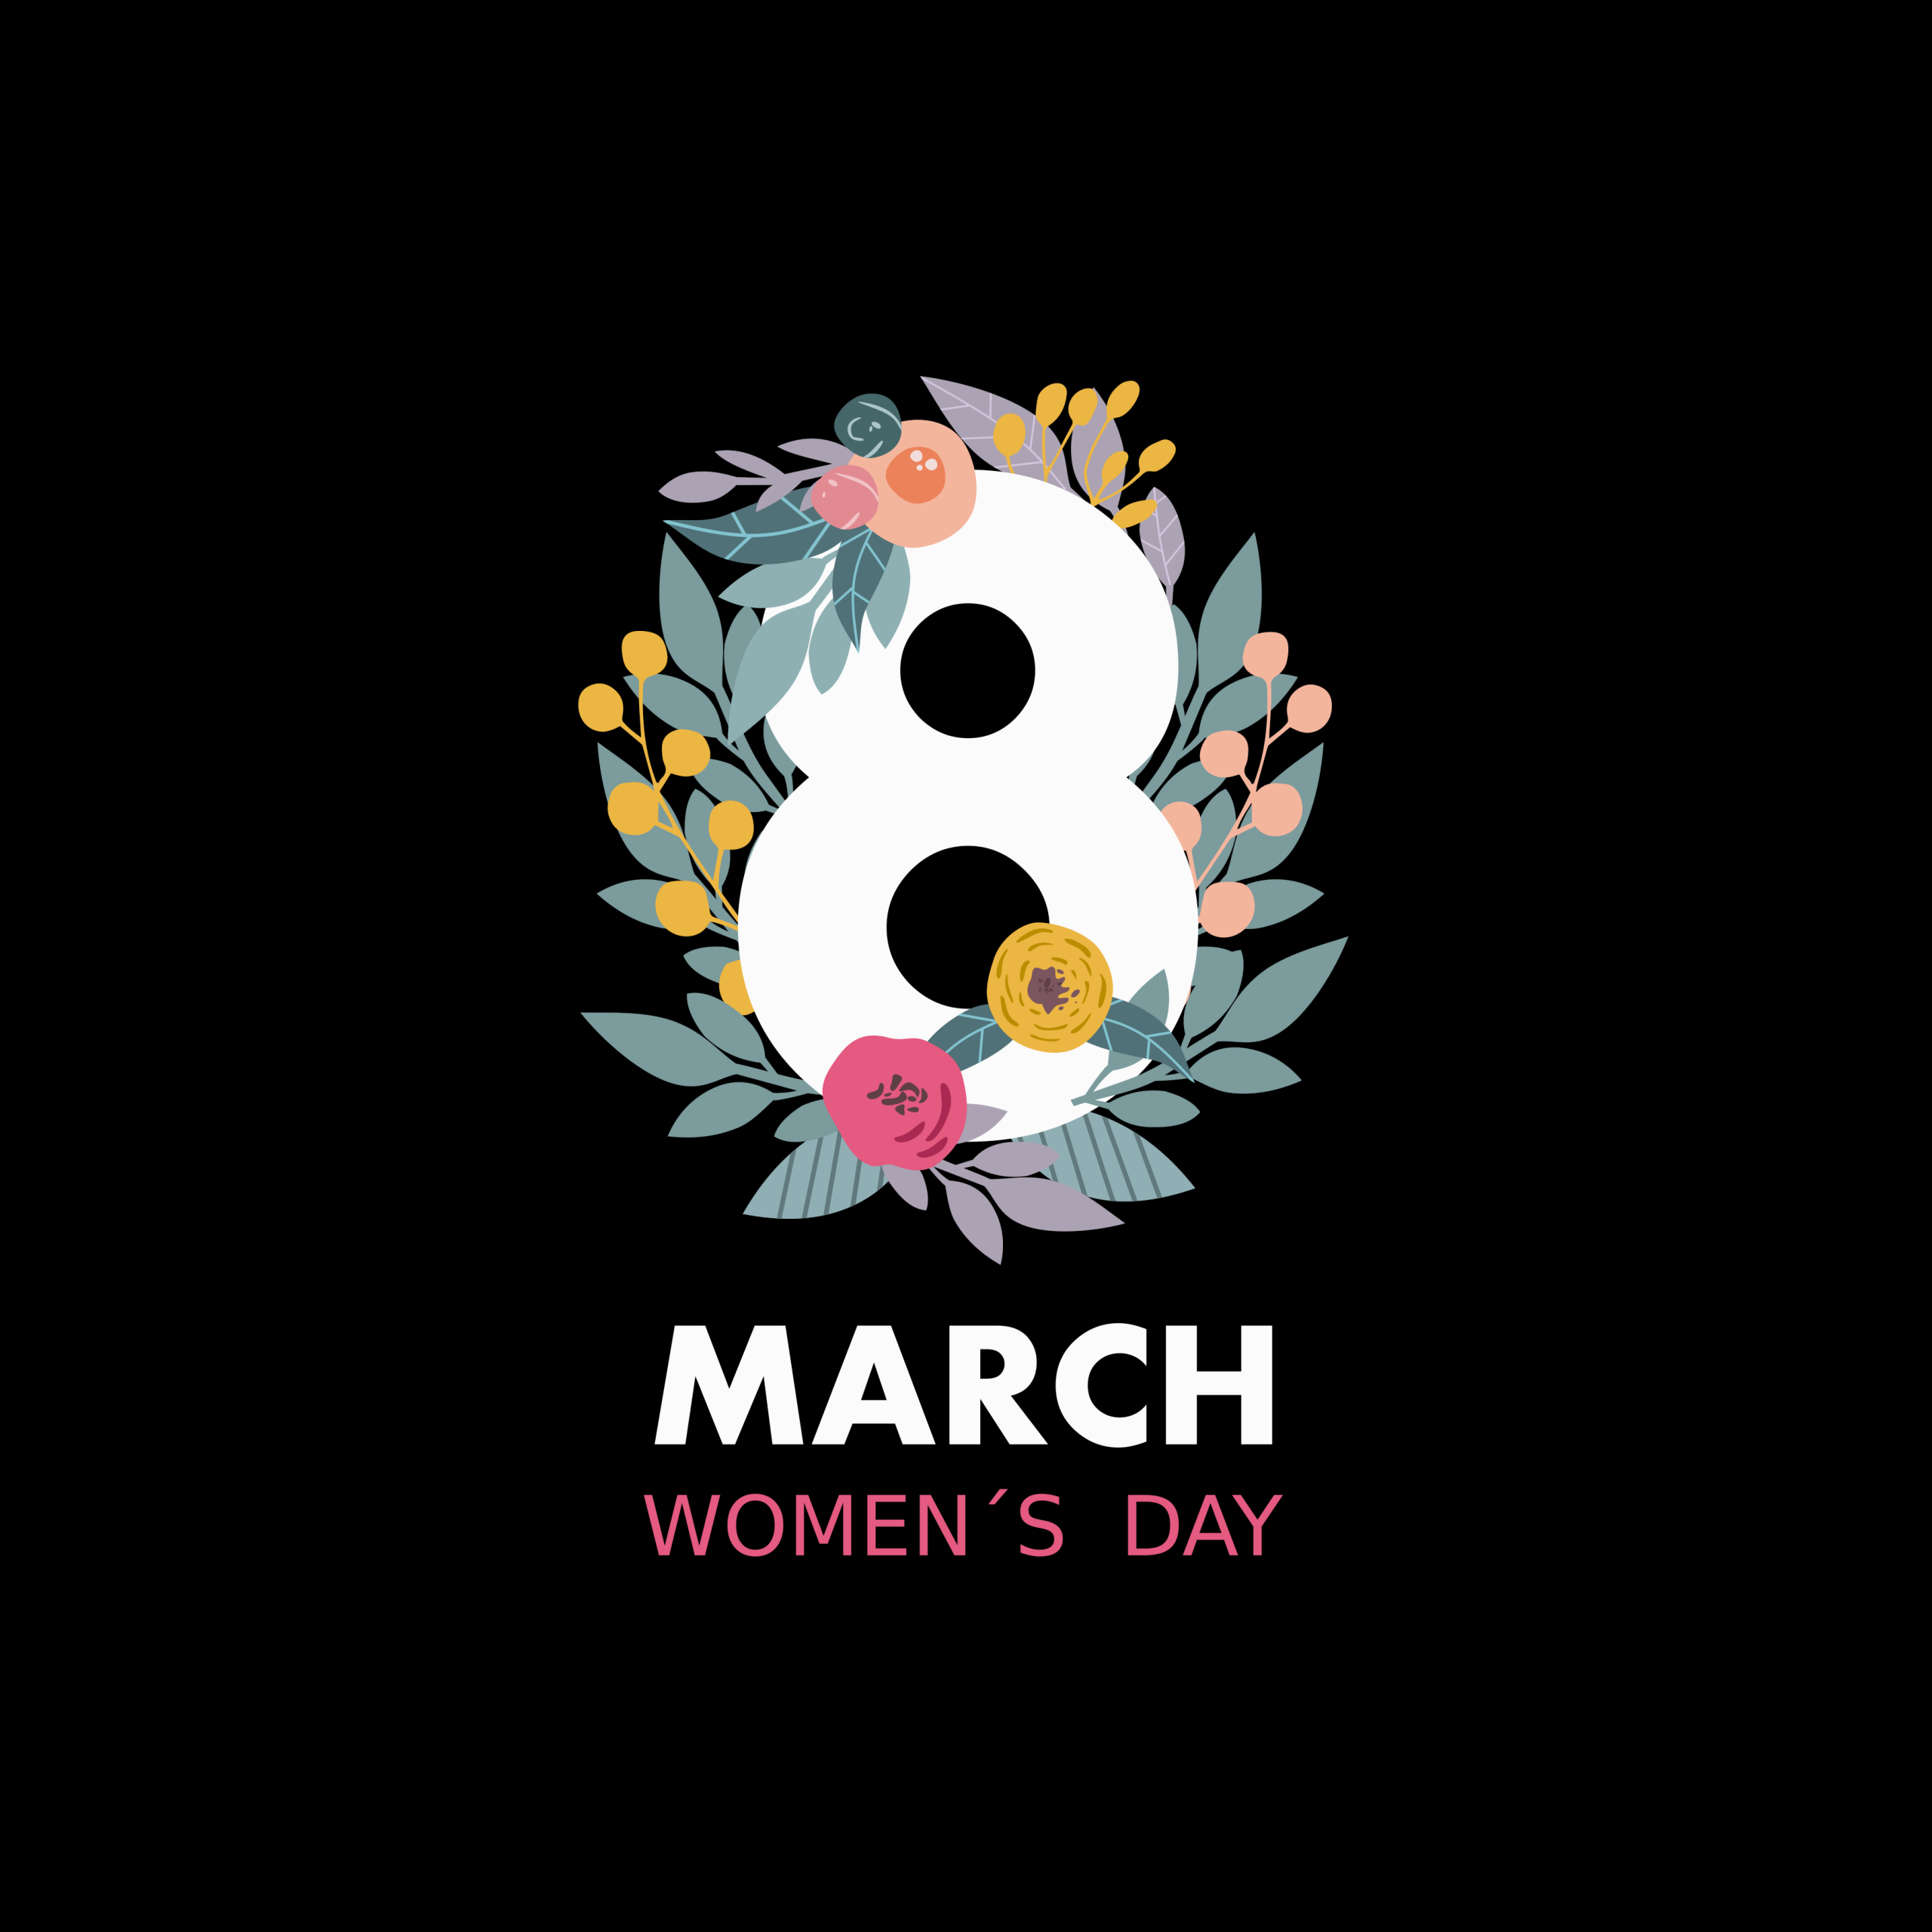 Women's Day Wallpaper 4K, March 8th, Black/Dark, #2550